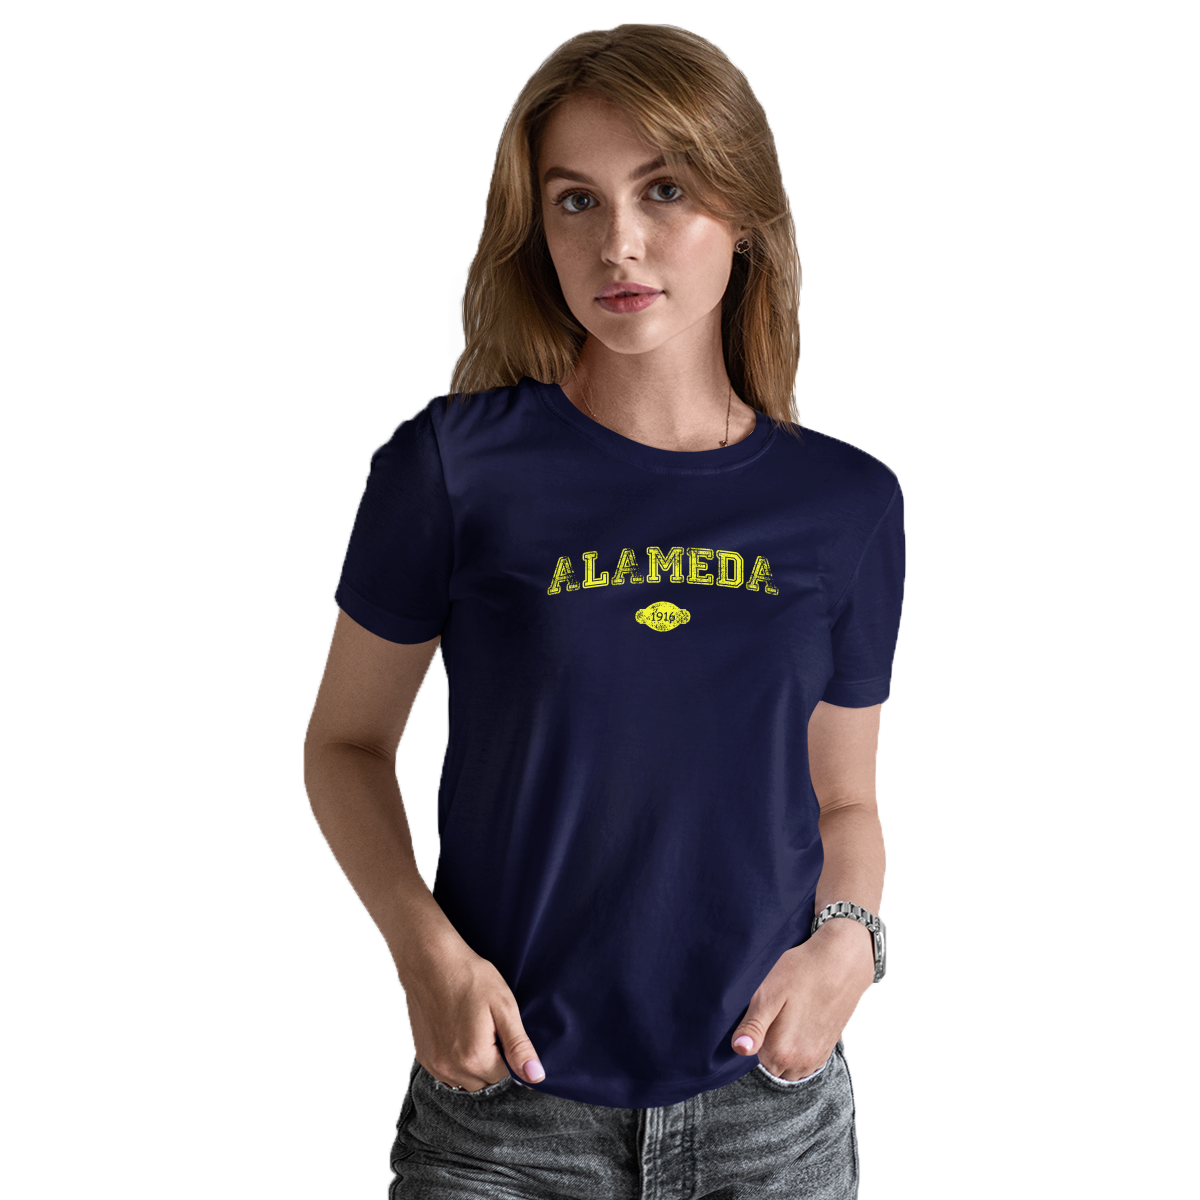 Alameda 1916 Women's T-shirt | Navy